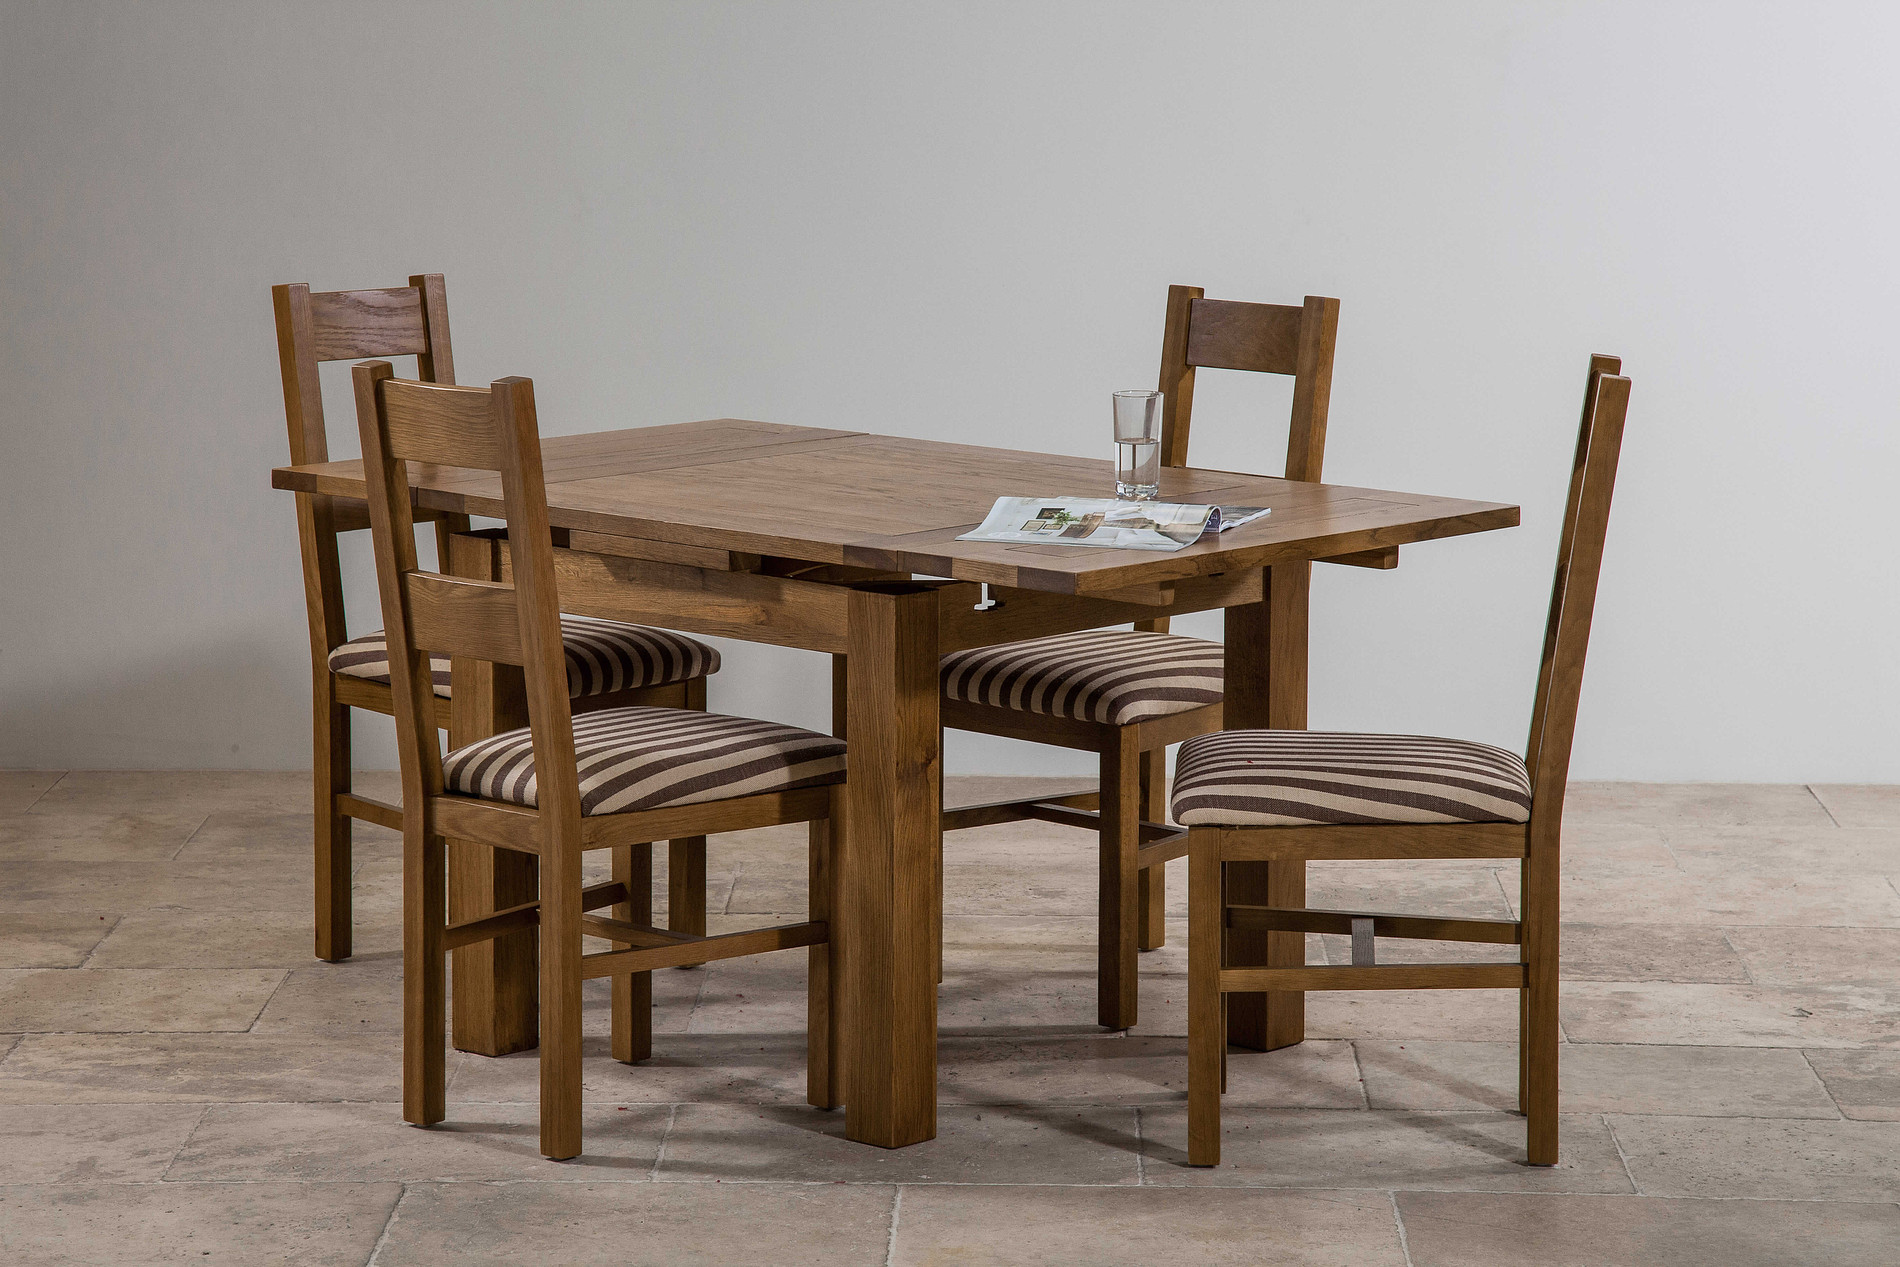 amazon 3ft x 3ft wood kitchen table